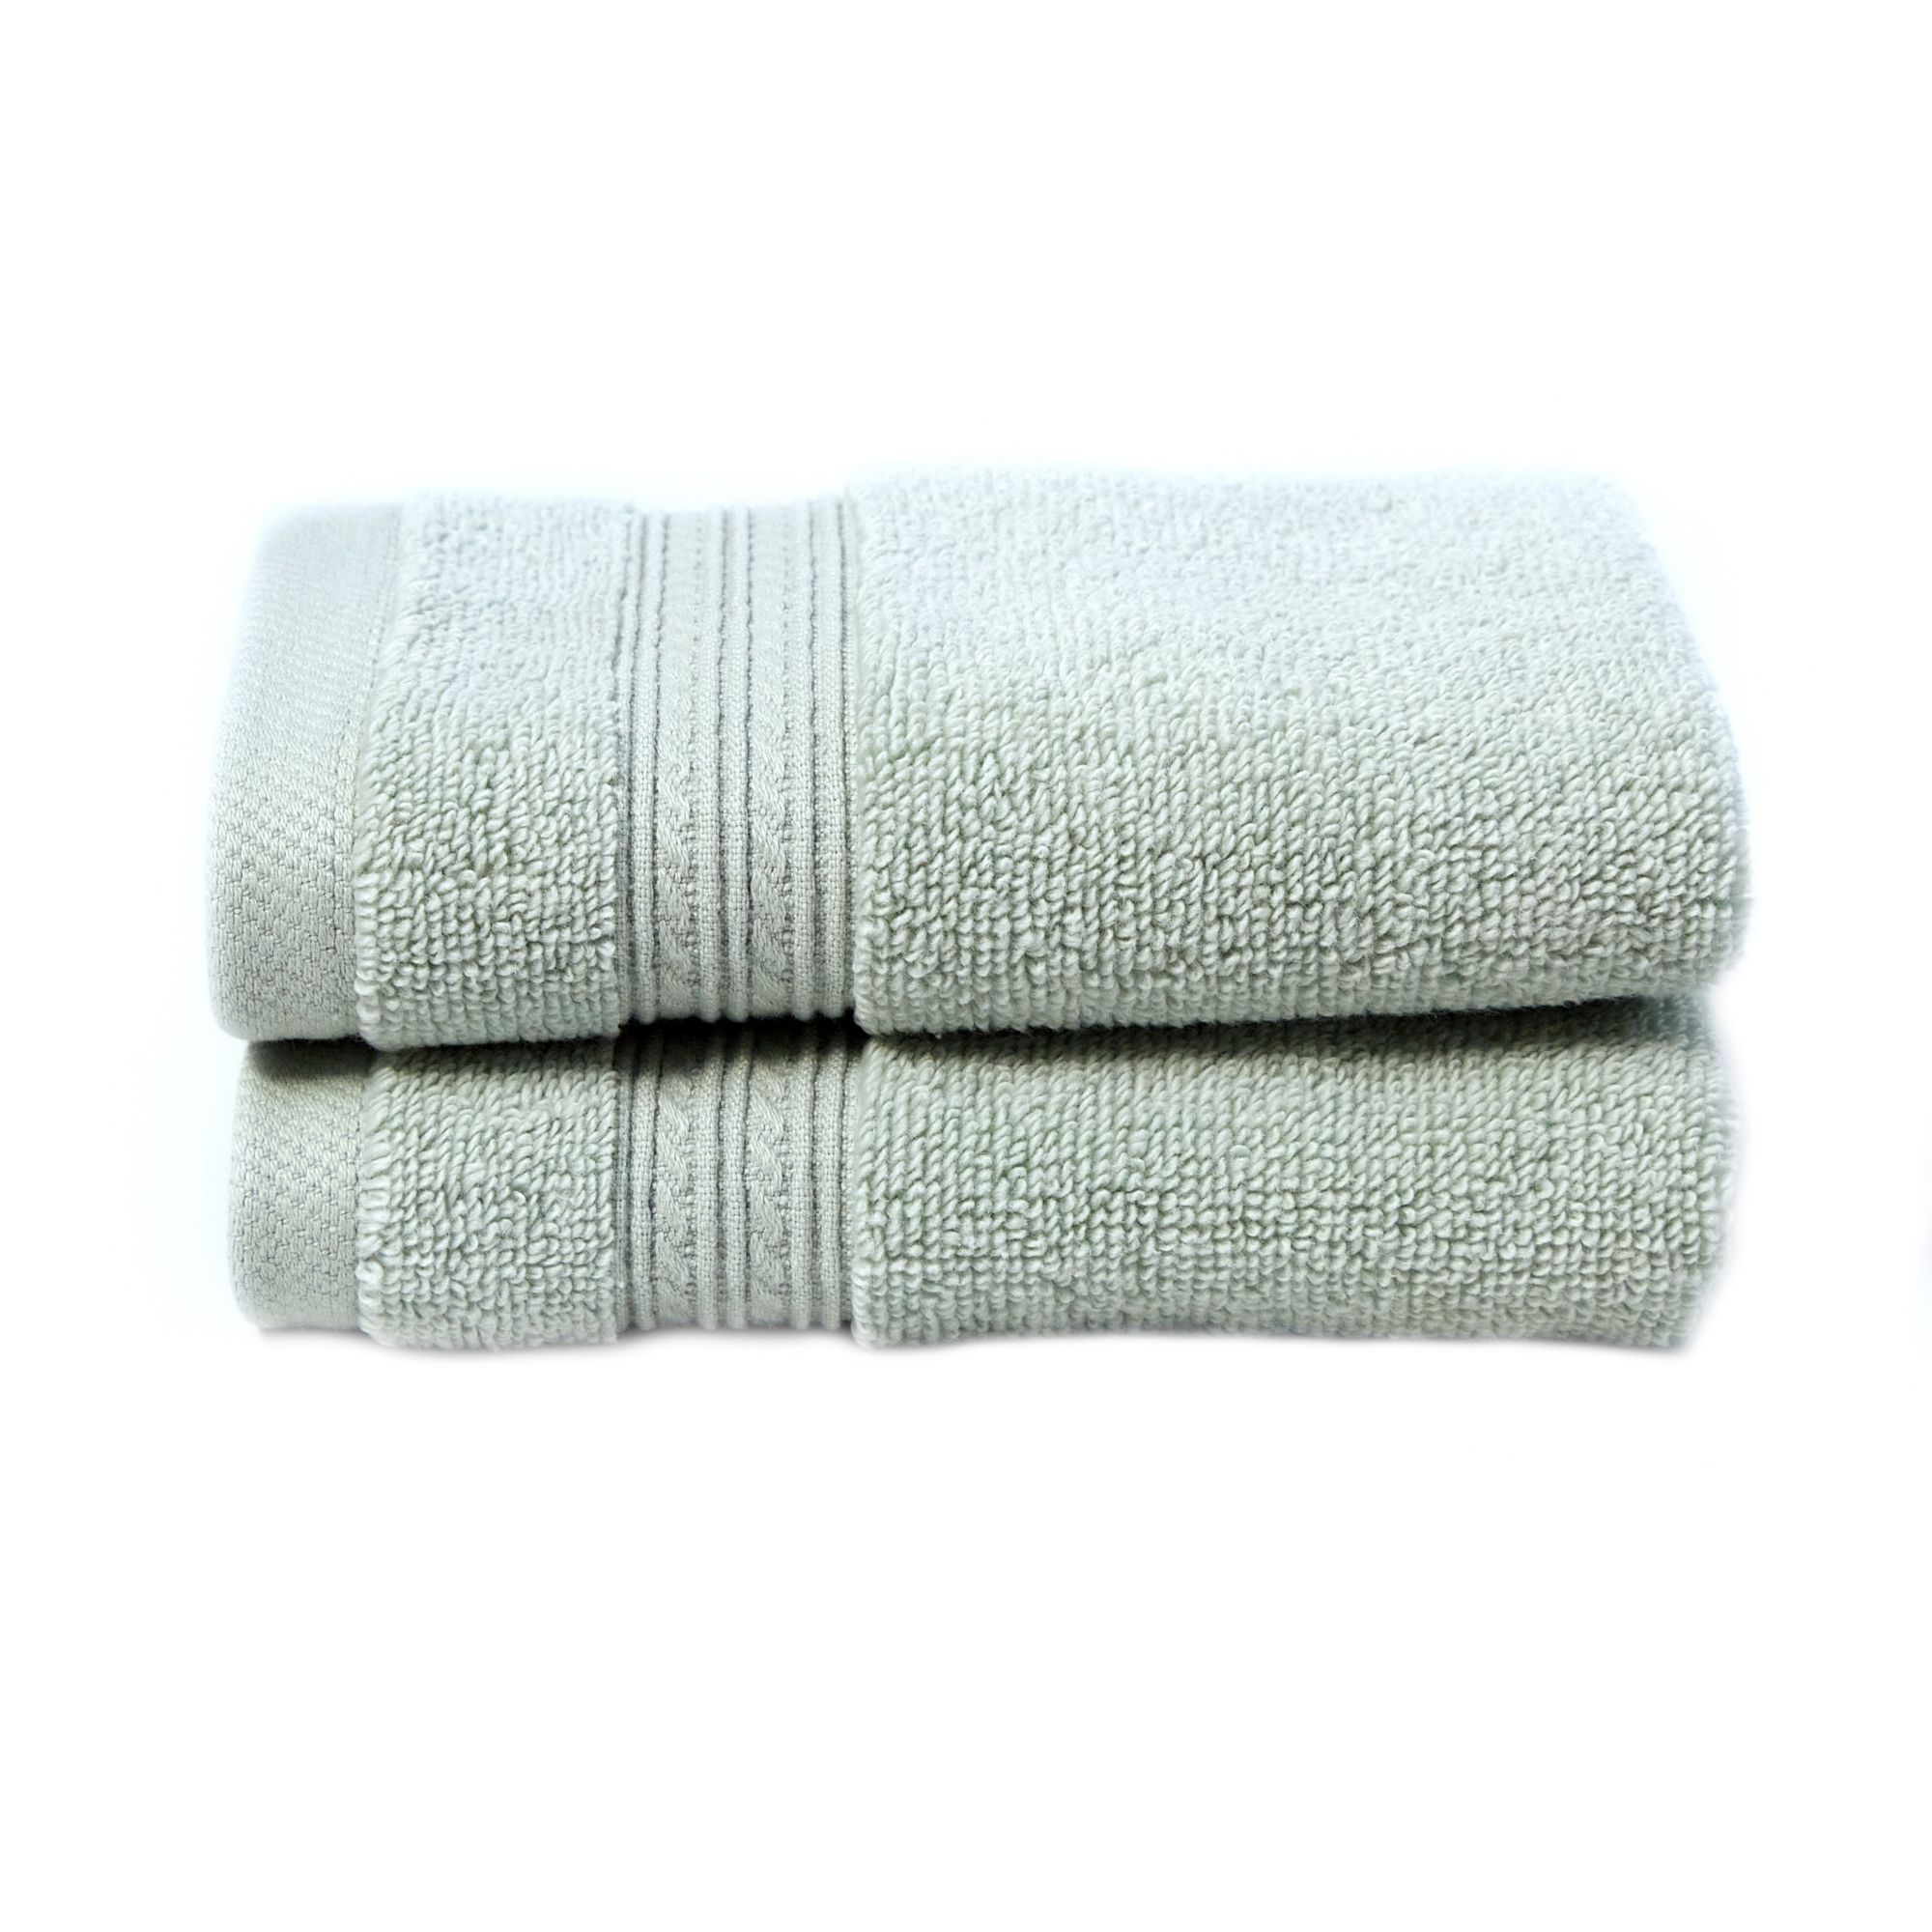 New QUICK DRY Zero Twist Cotton Hand Towel Blue Green Striped